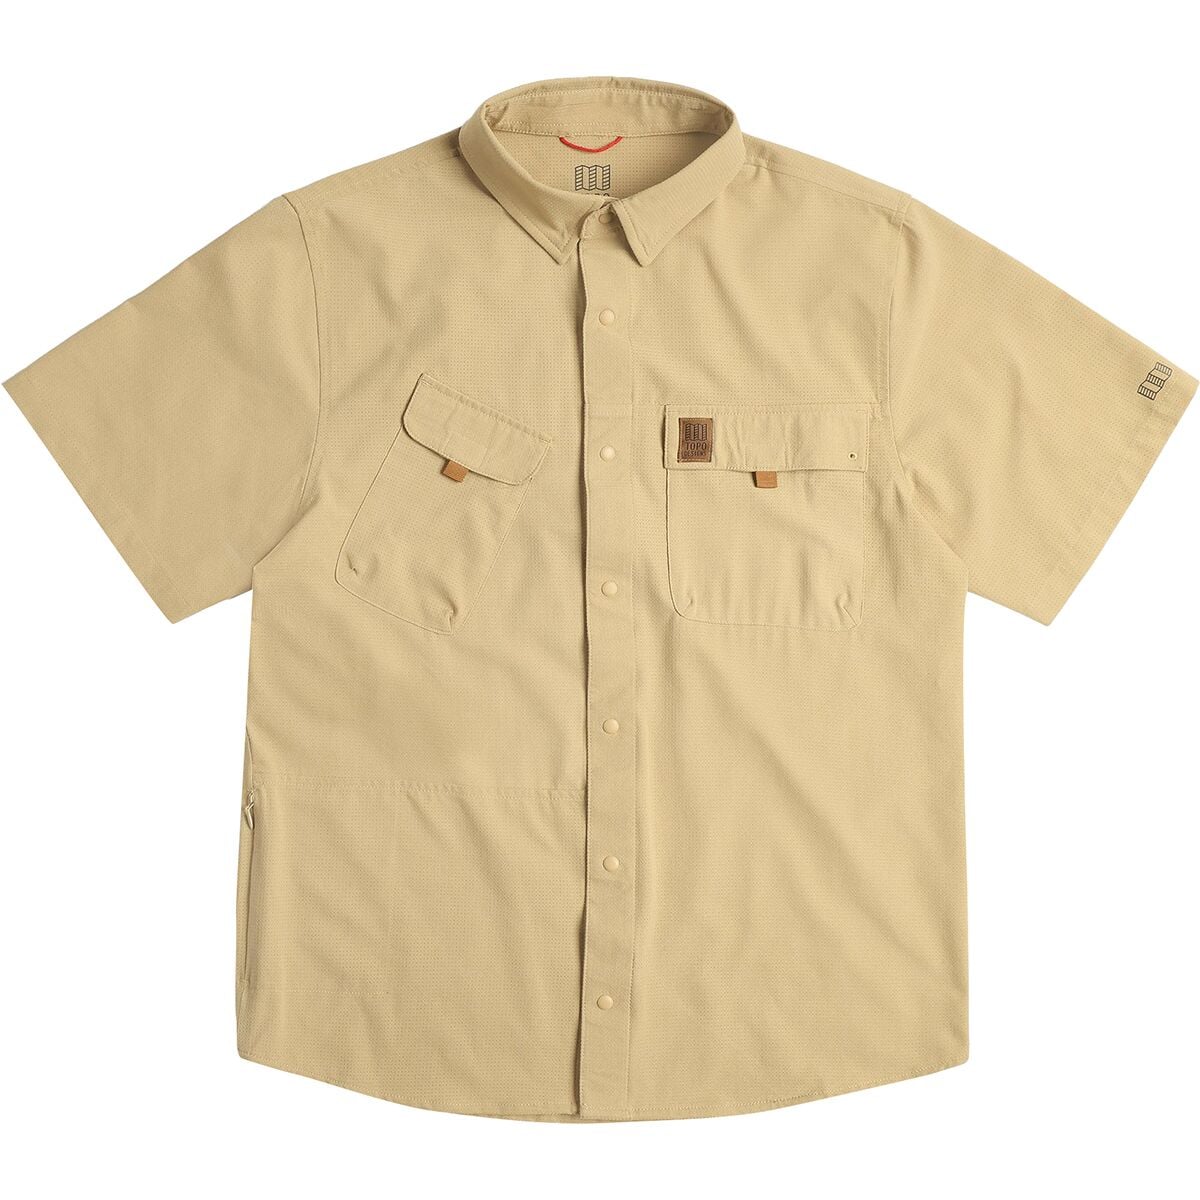 Retro River Short-Sleeve Shirt - Men